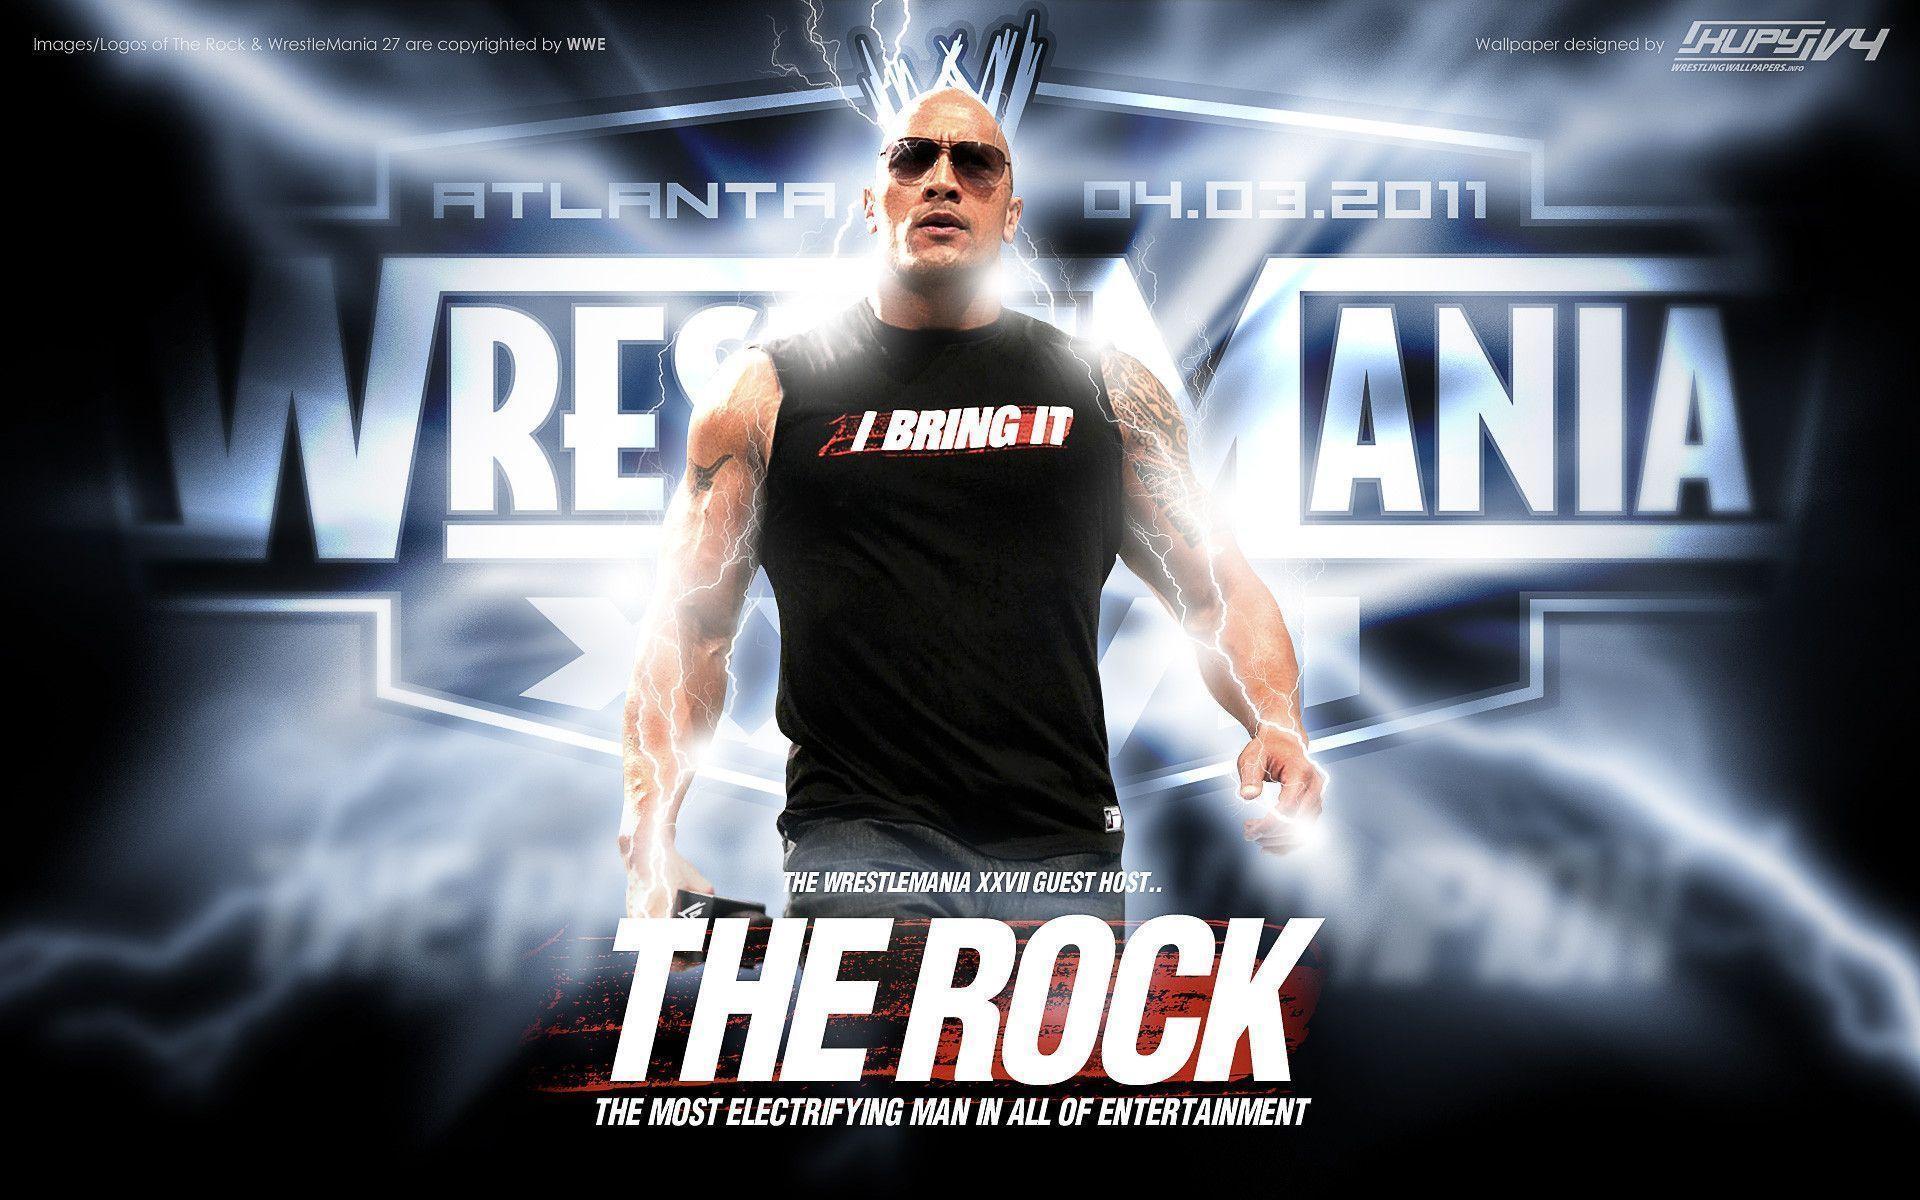 NEW WrestleMania 27 The Rock wallpaper! Wrestling Wallpaper